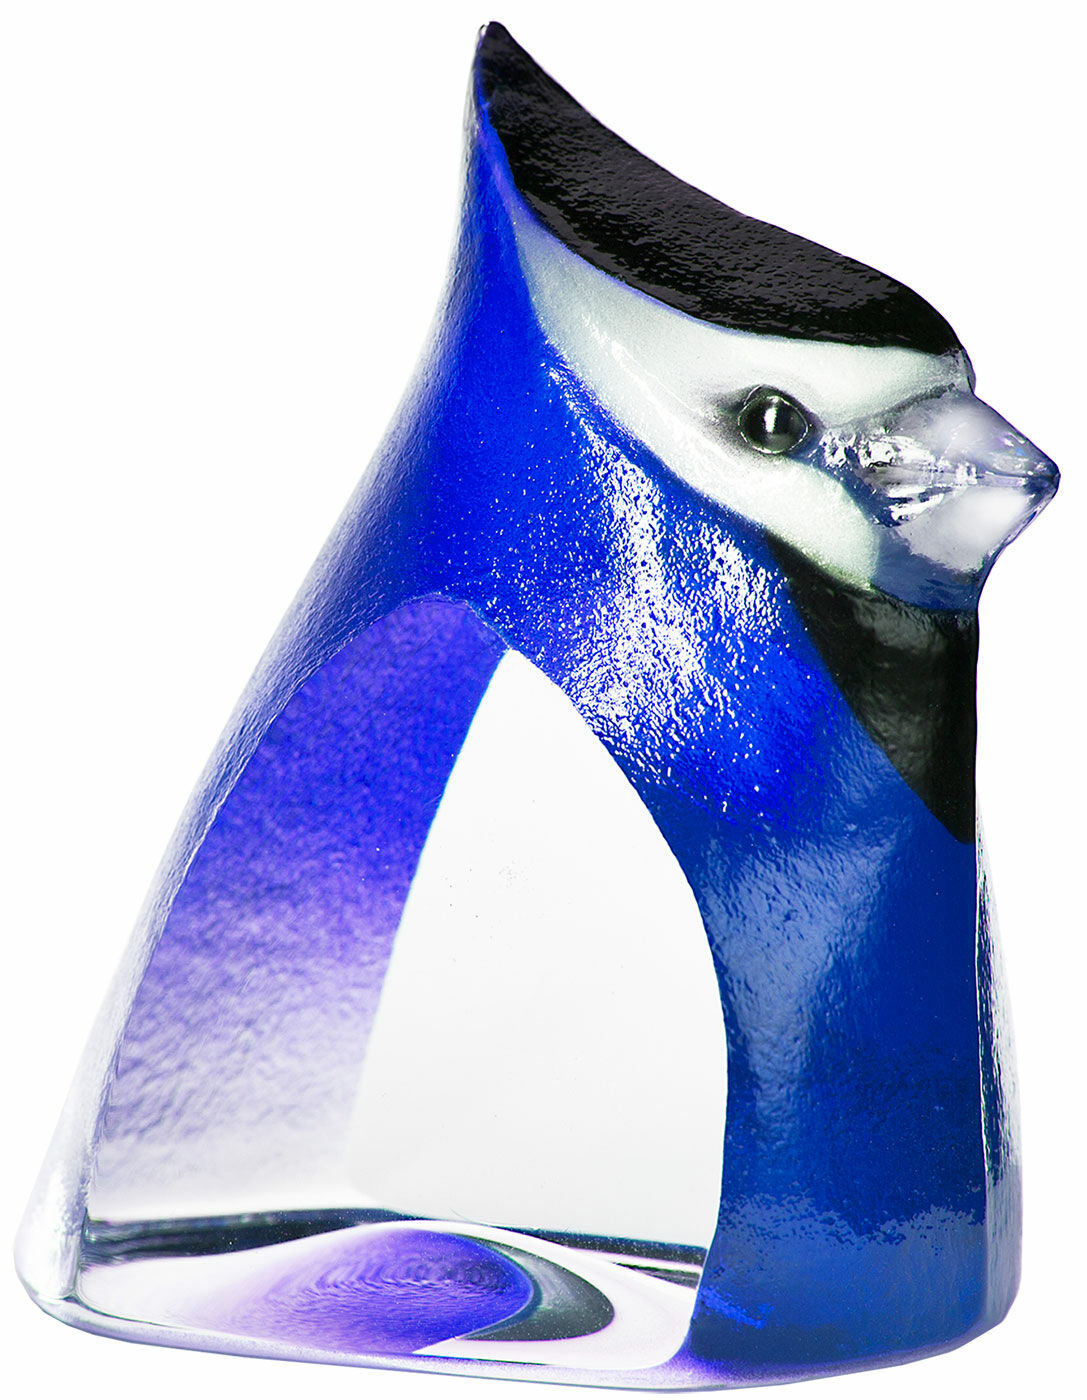 Glass object "Birdie", blue version by Mats Jonasson